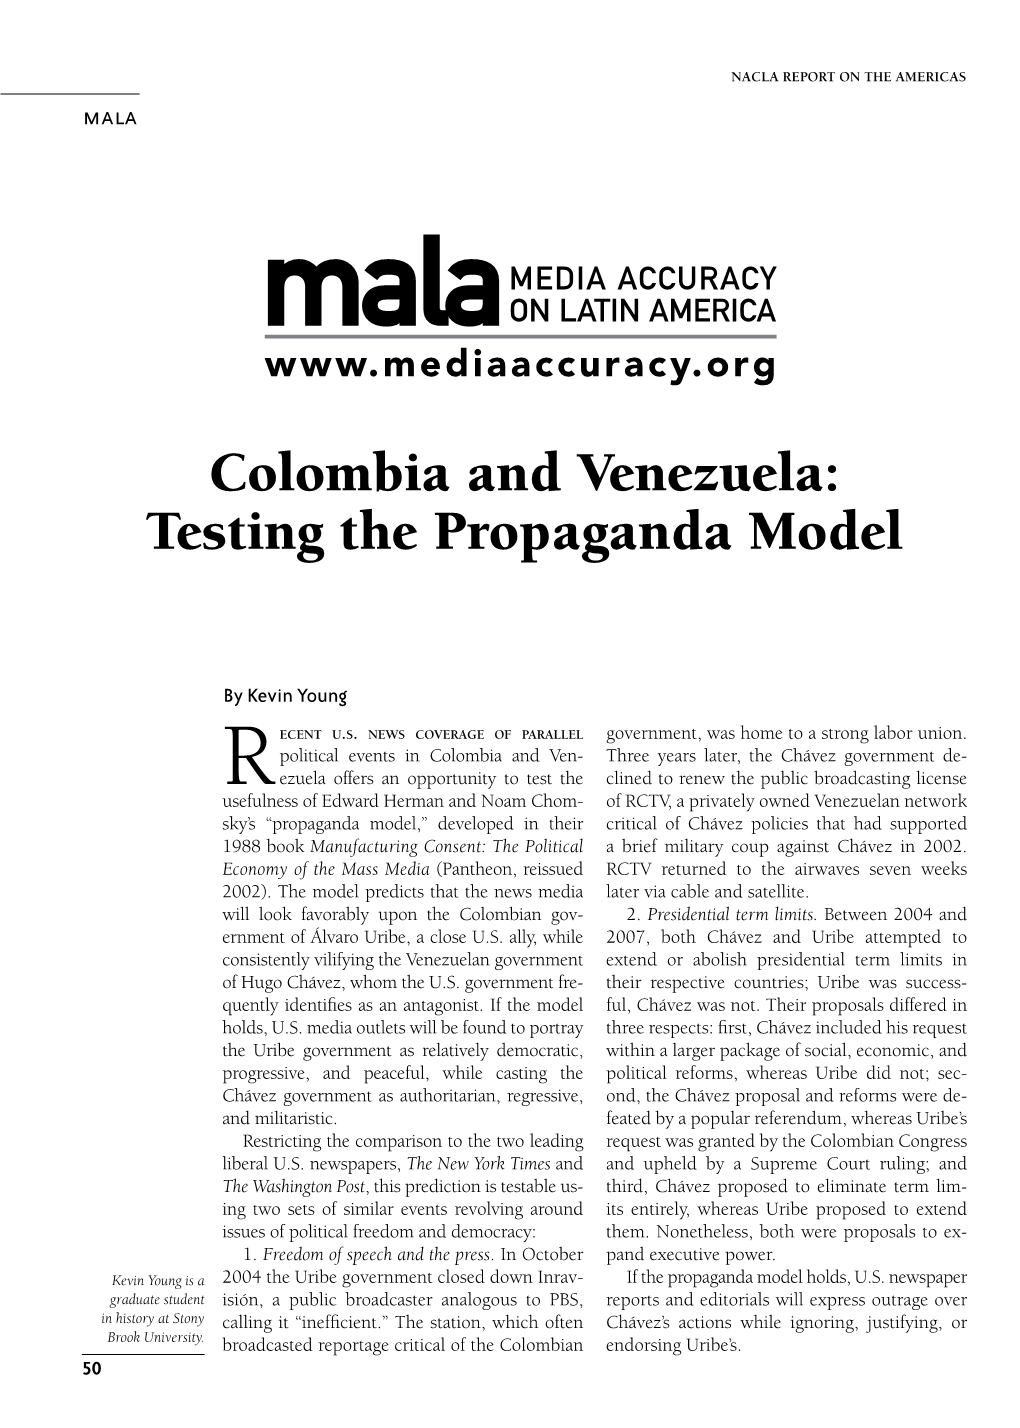 Colombia and Venezuela: Testing the Propaganda Model